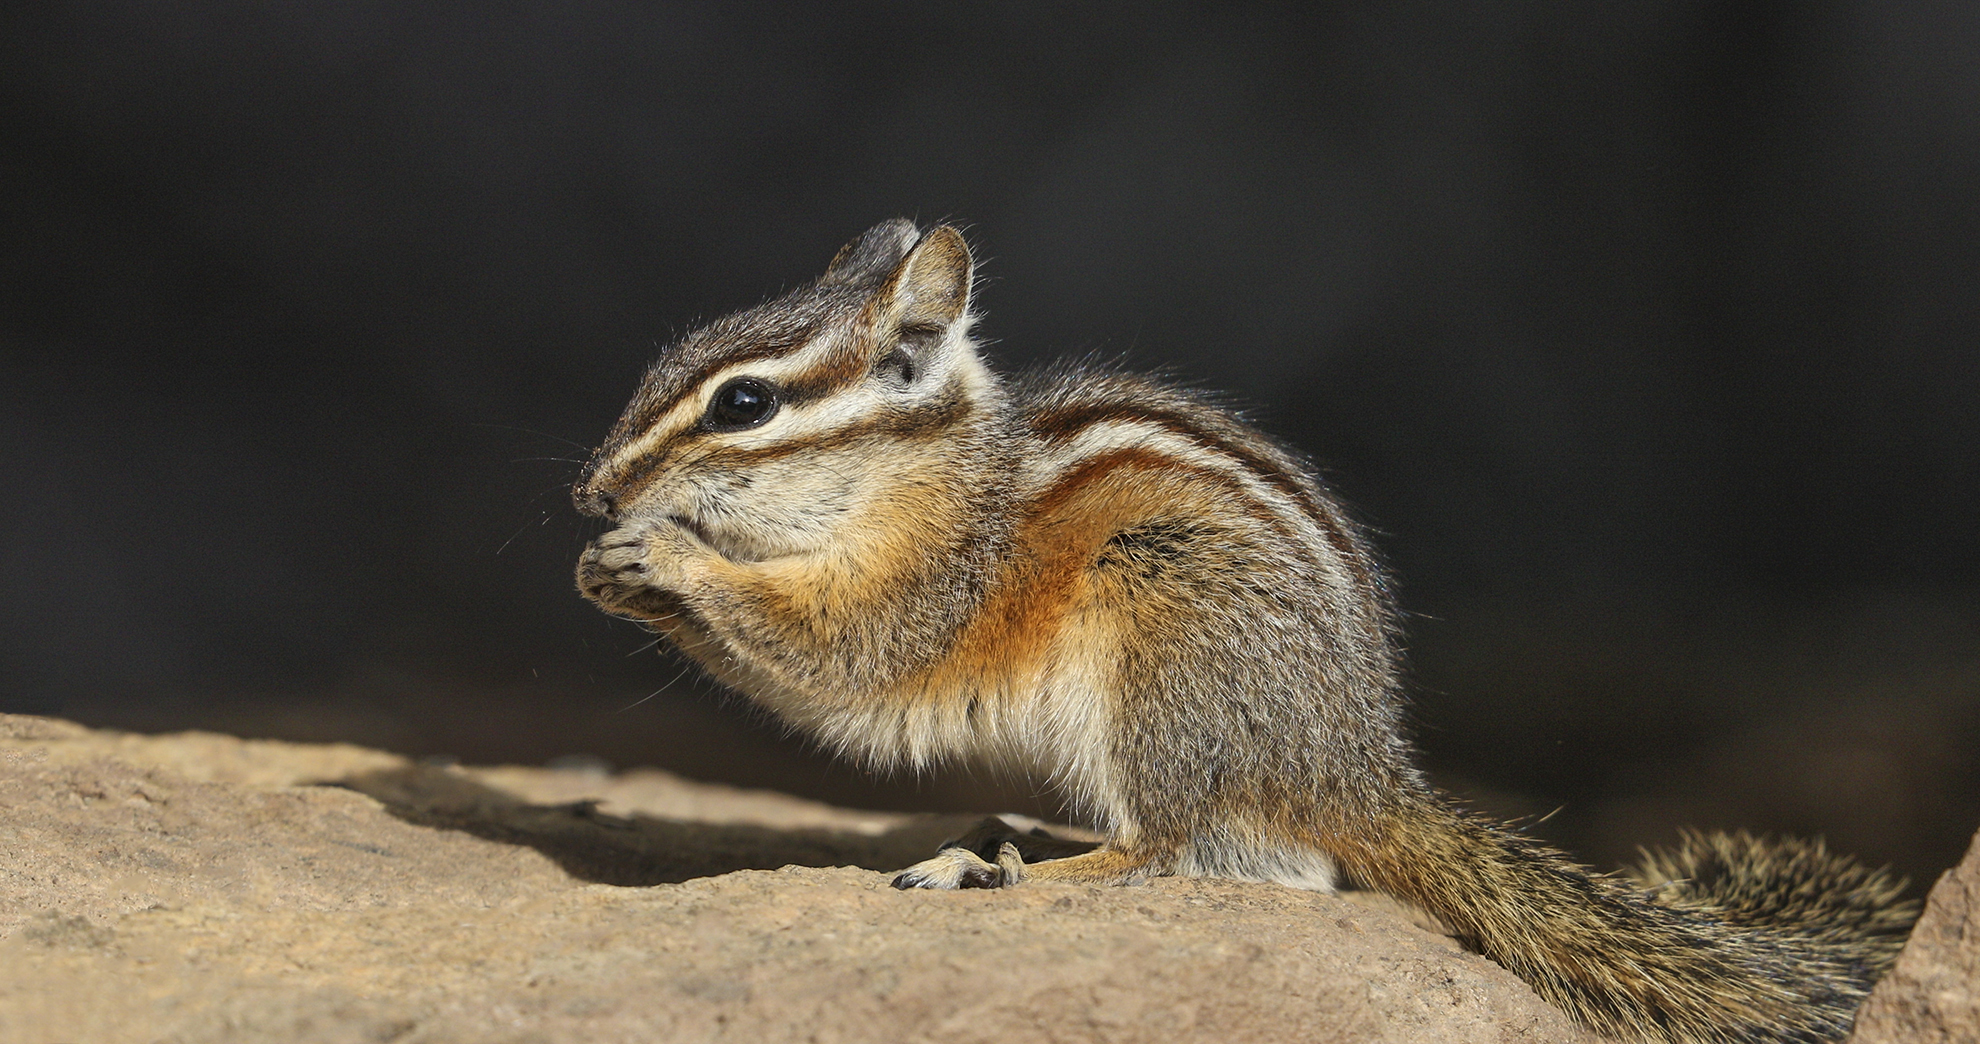 close up shot of chipmunk eating a nut